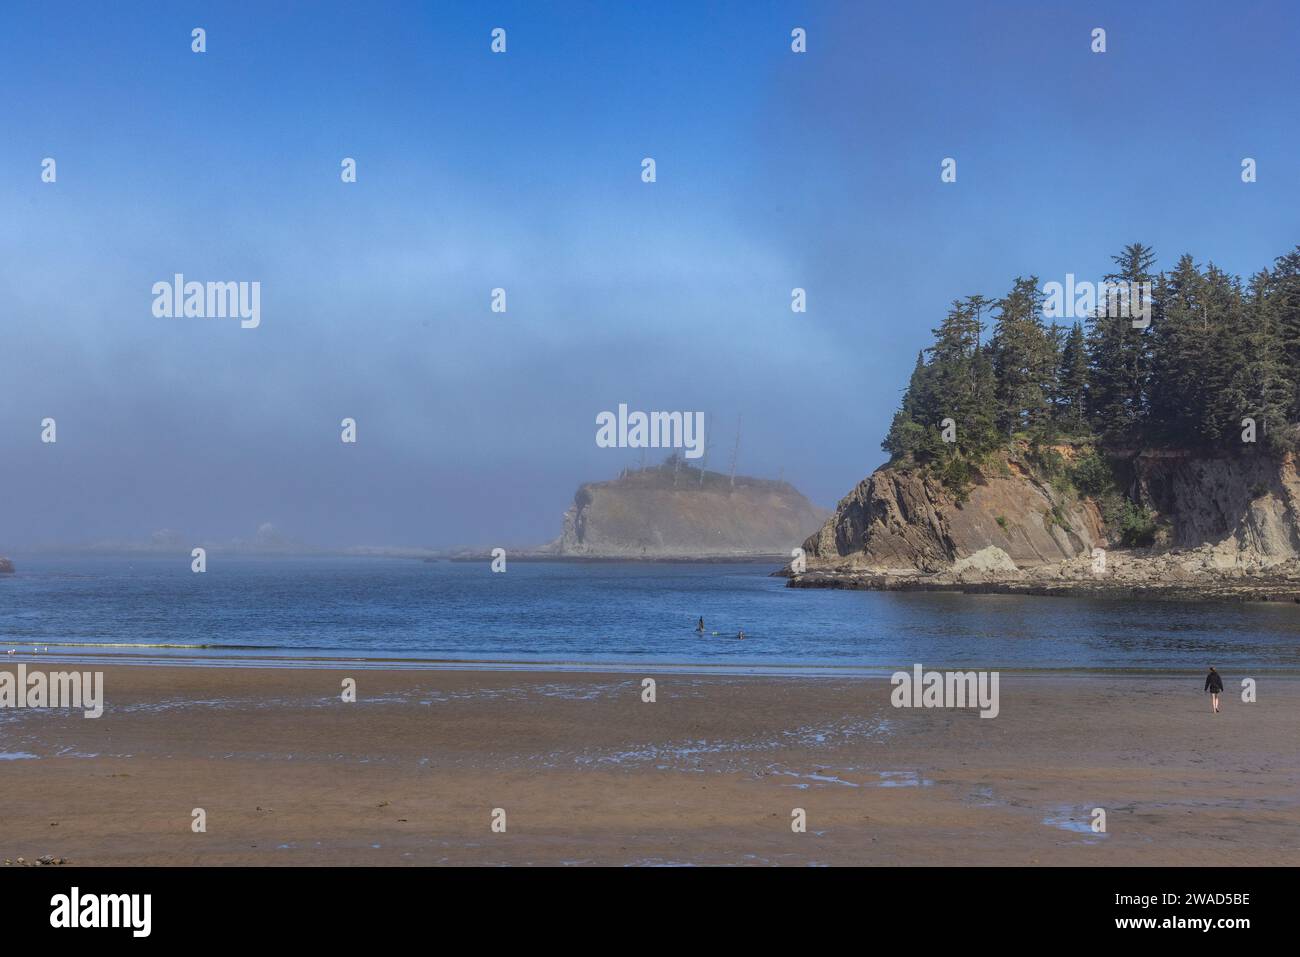 USA, Oregon, Coos Bay, Rocky headlands and forest along coast Stock Photo